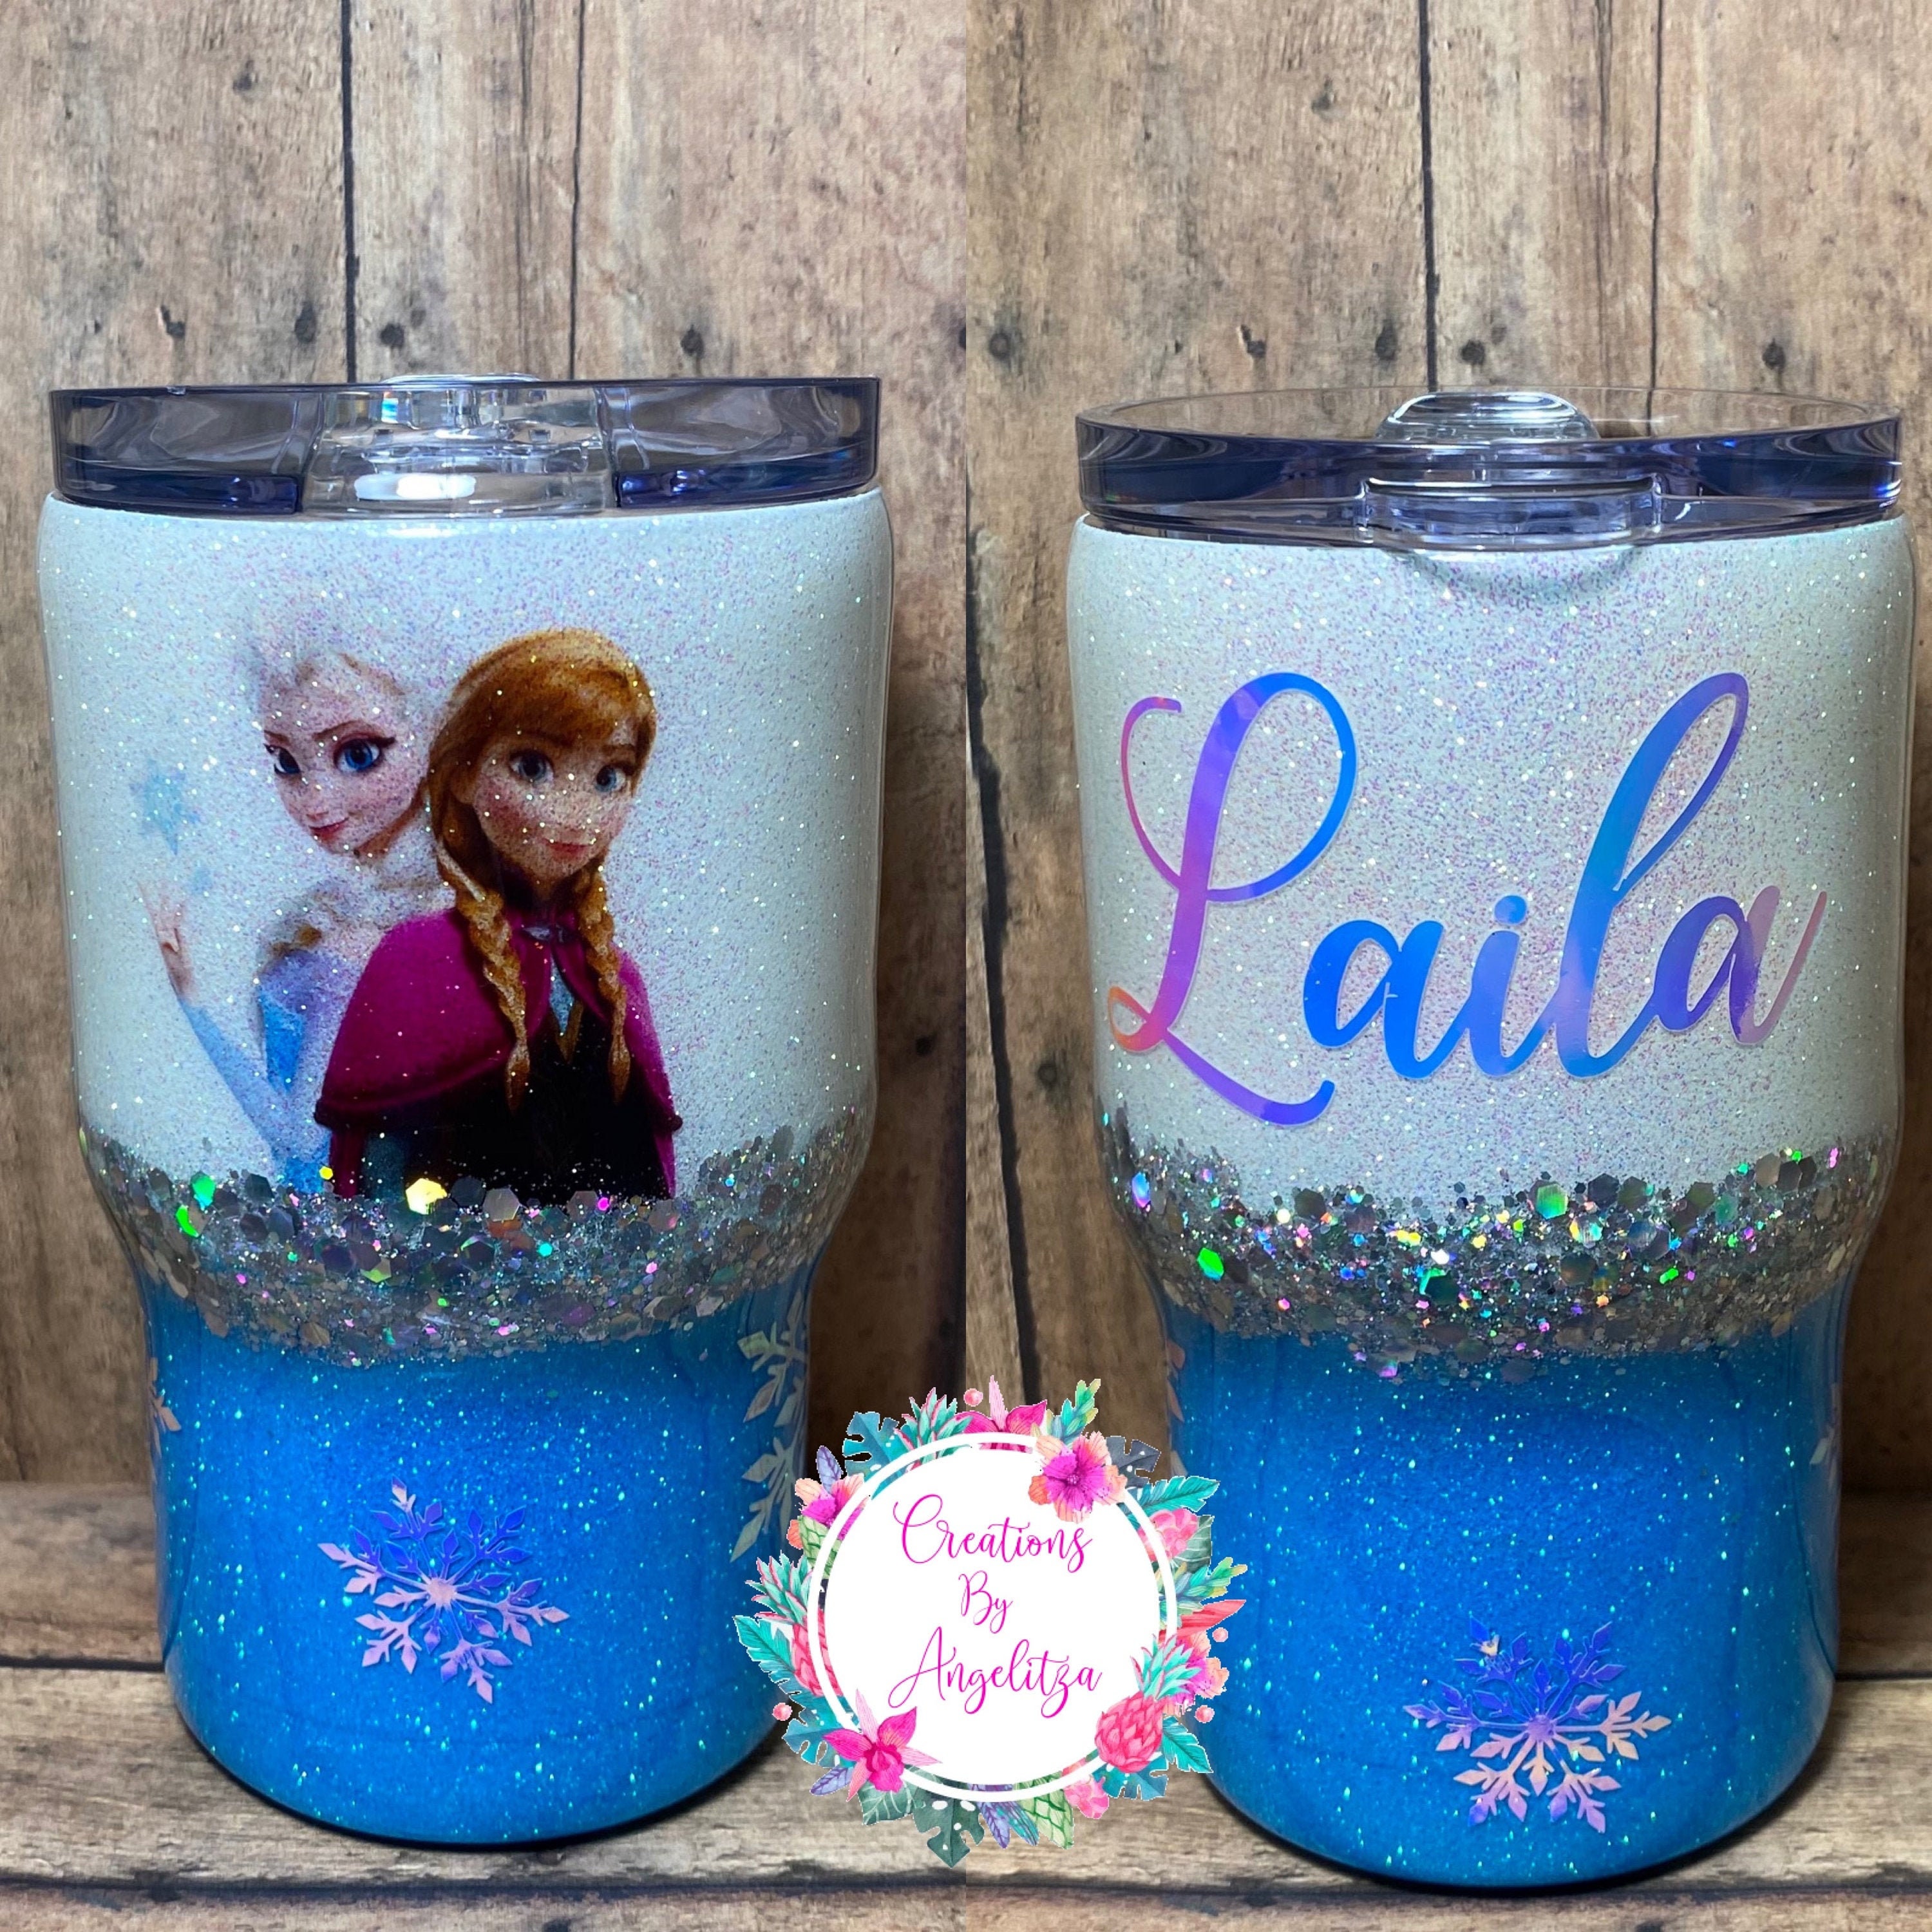 DISNEY Frozen Anna & Elsa Glitter Sparkle Cups Tumbler Price in India - Buy  DISNEY Frozen Anna & Elsa Glitter Sparkle Cups Tumbler online at